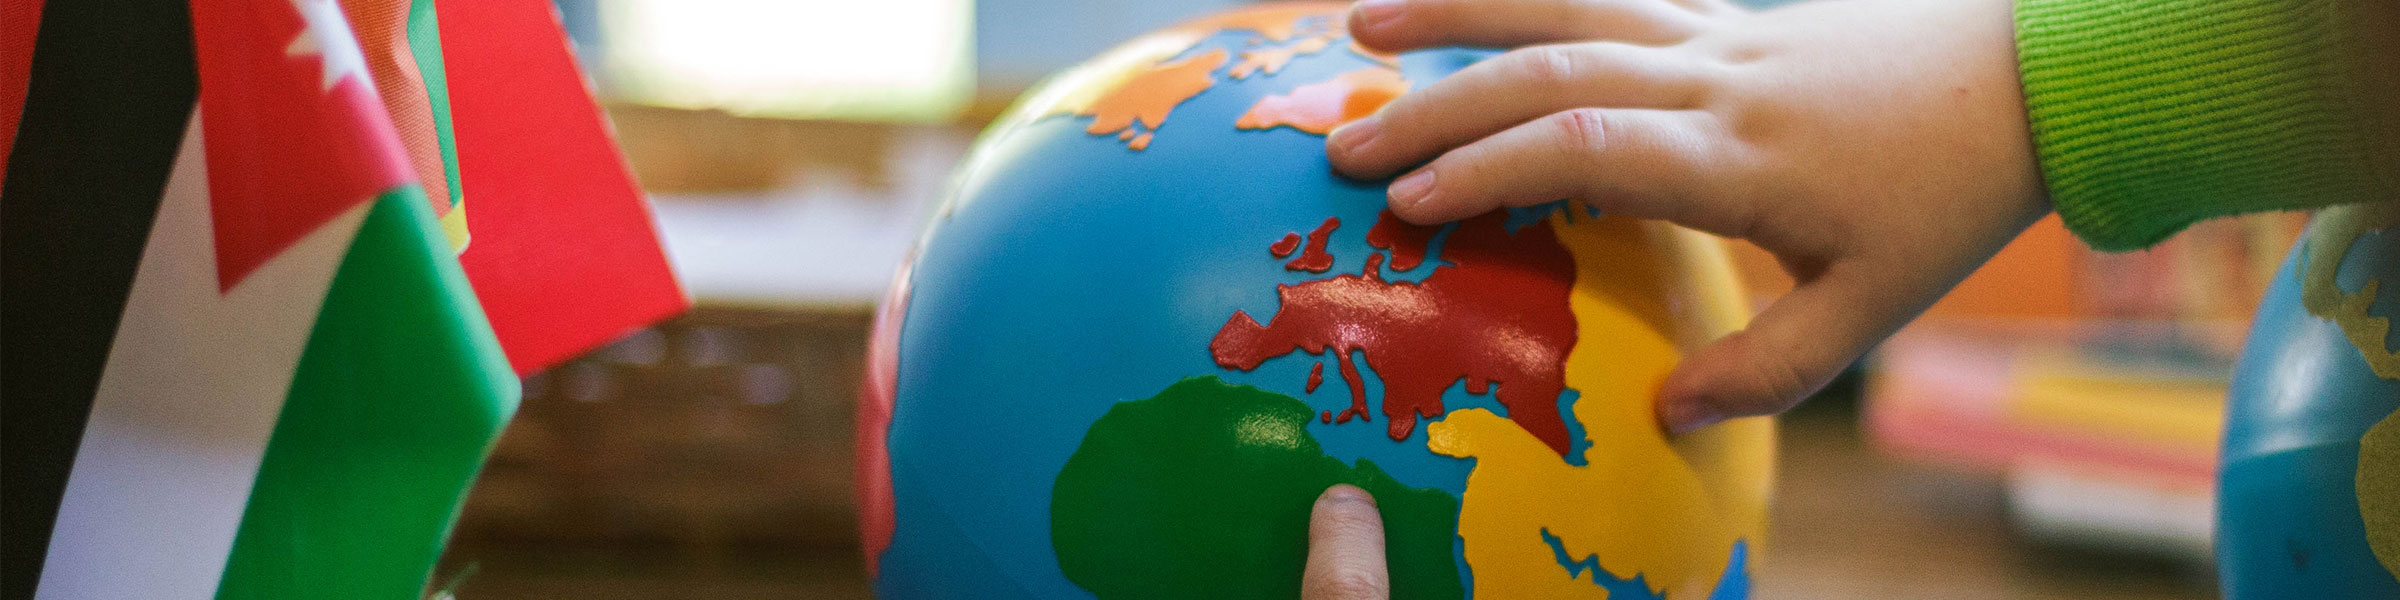 Montessori classroom child's hand on globe